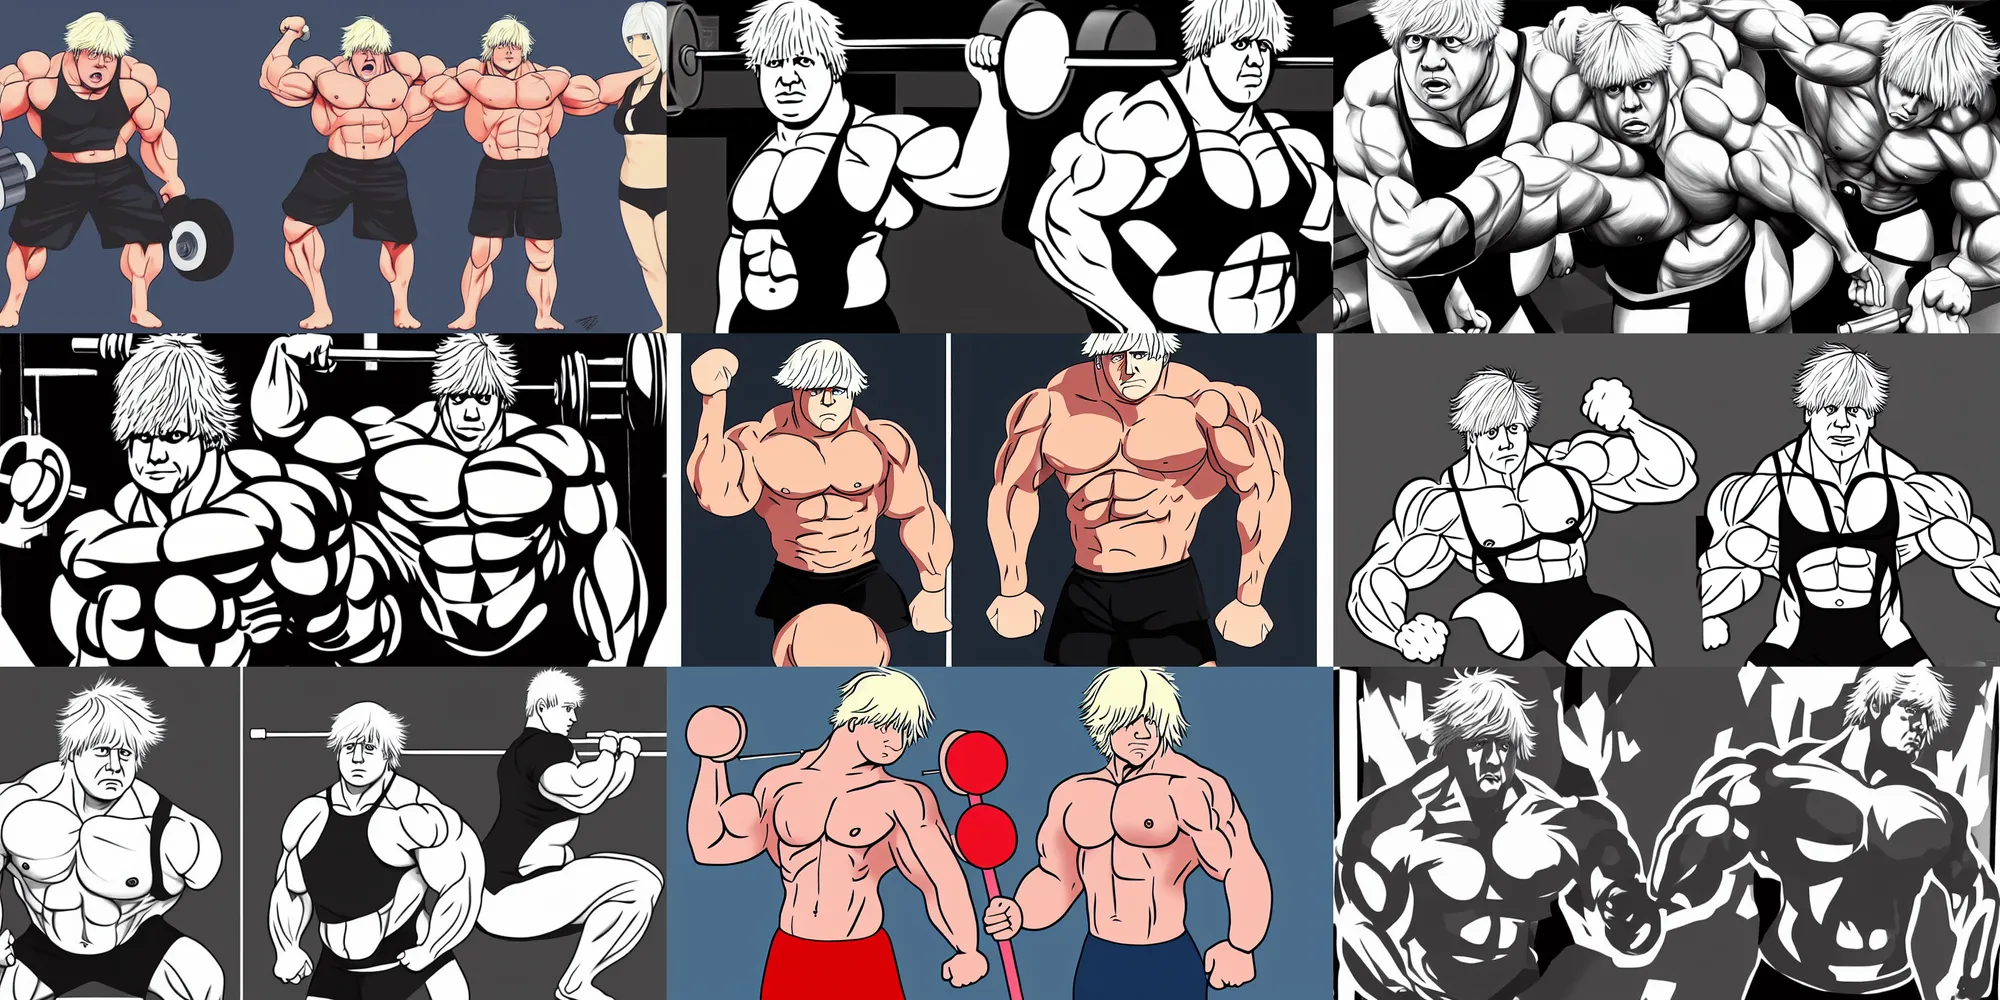 hand drawn cartoon illustration of an anime fitness muscle boy ilustração  do Stock